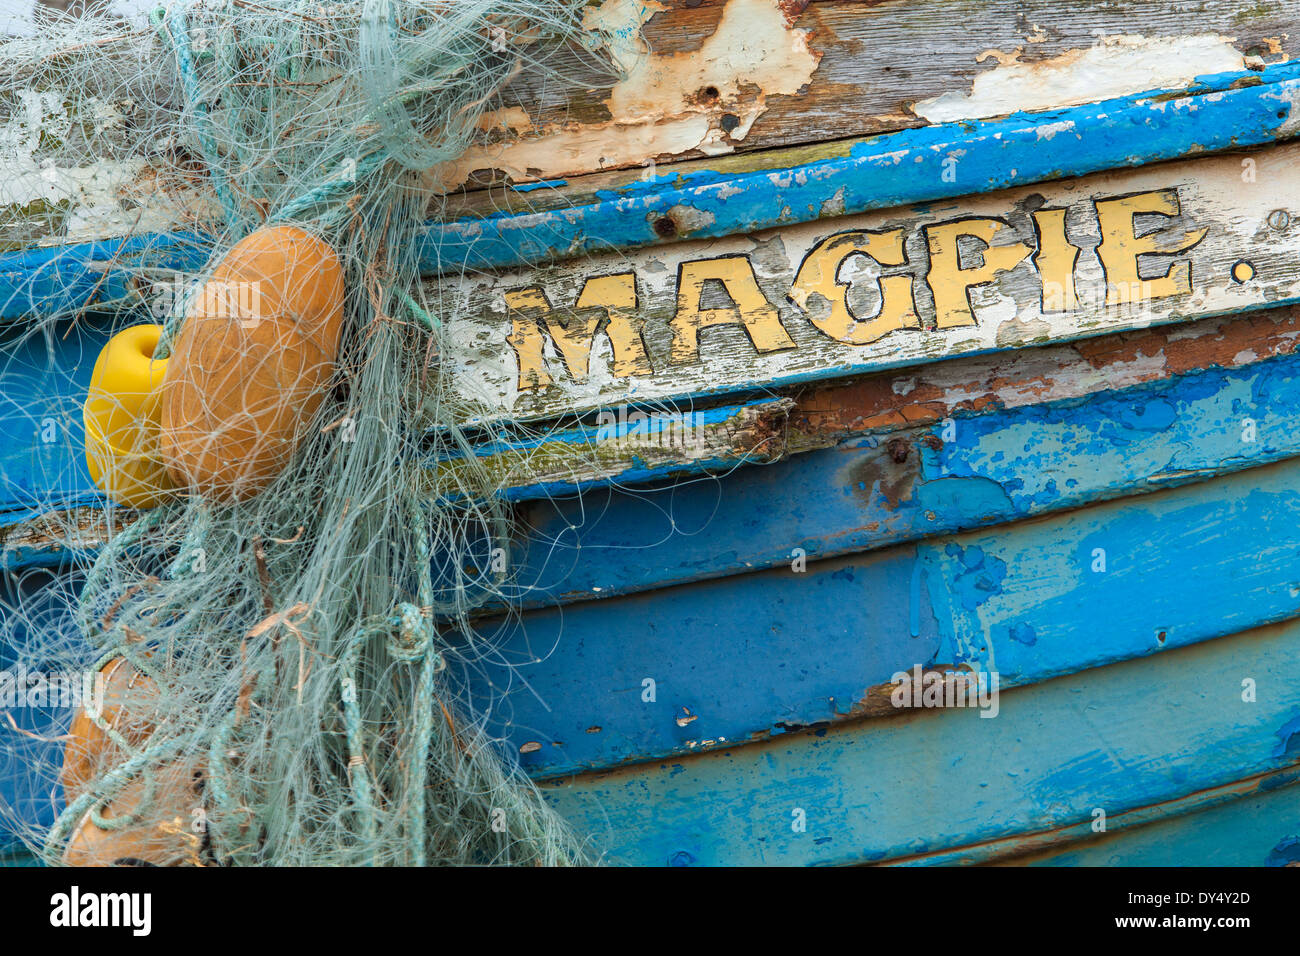 Boot namens "Magpie", heilige Insel Lindisfarne, England Stockfoto